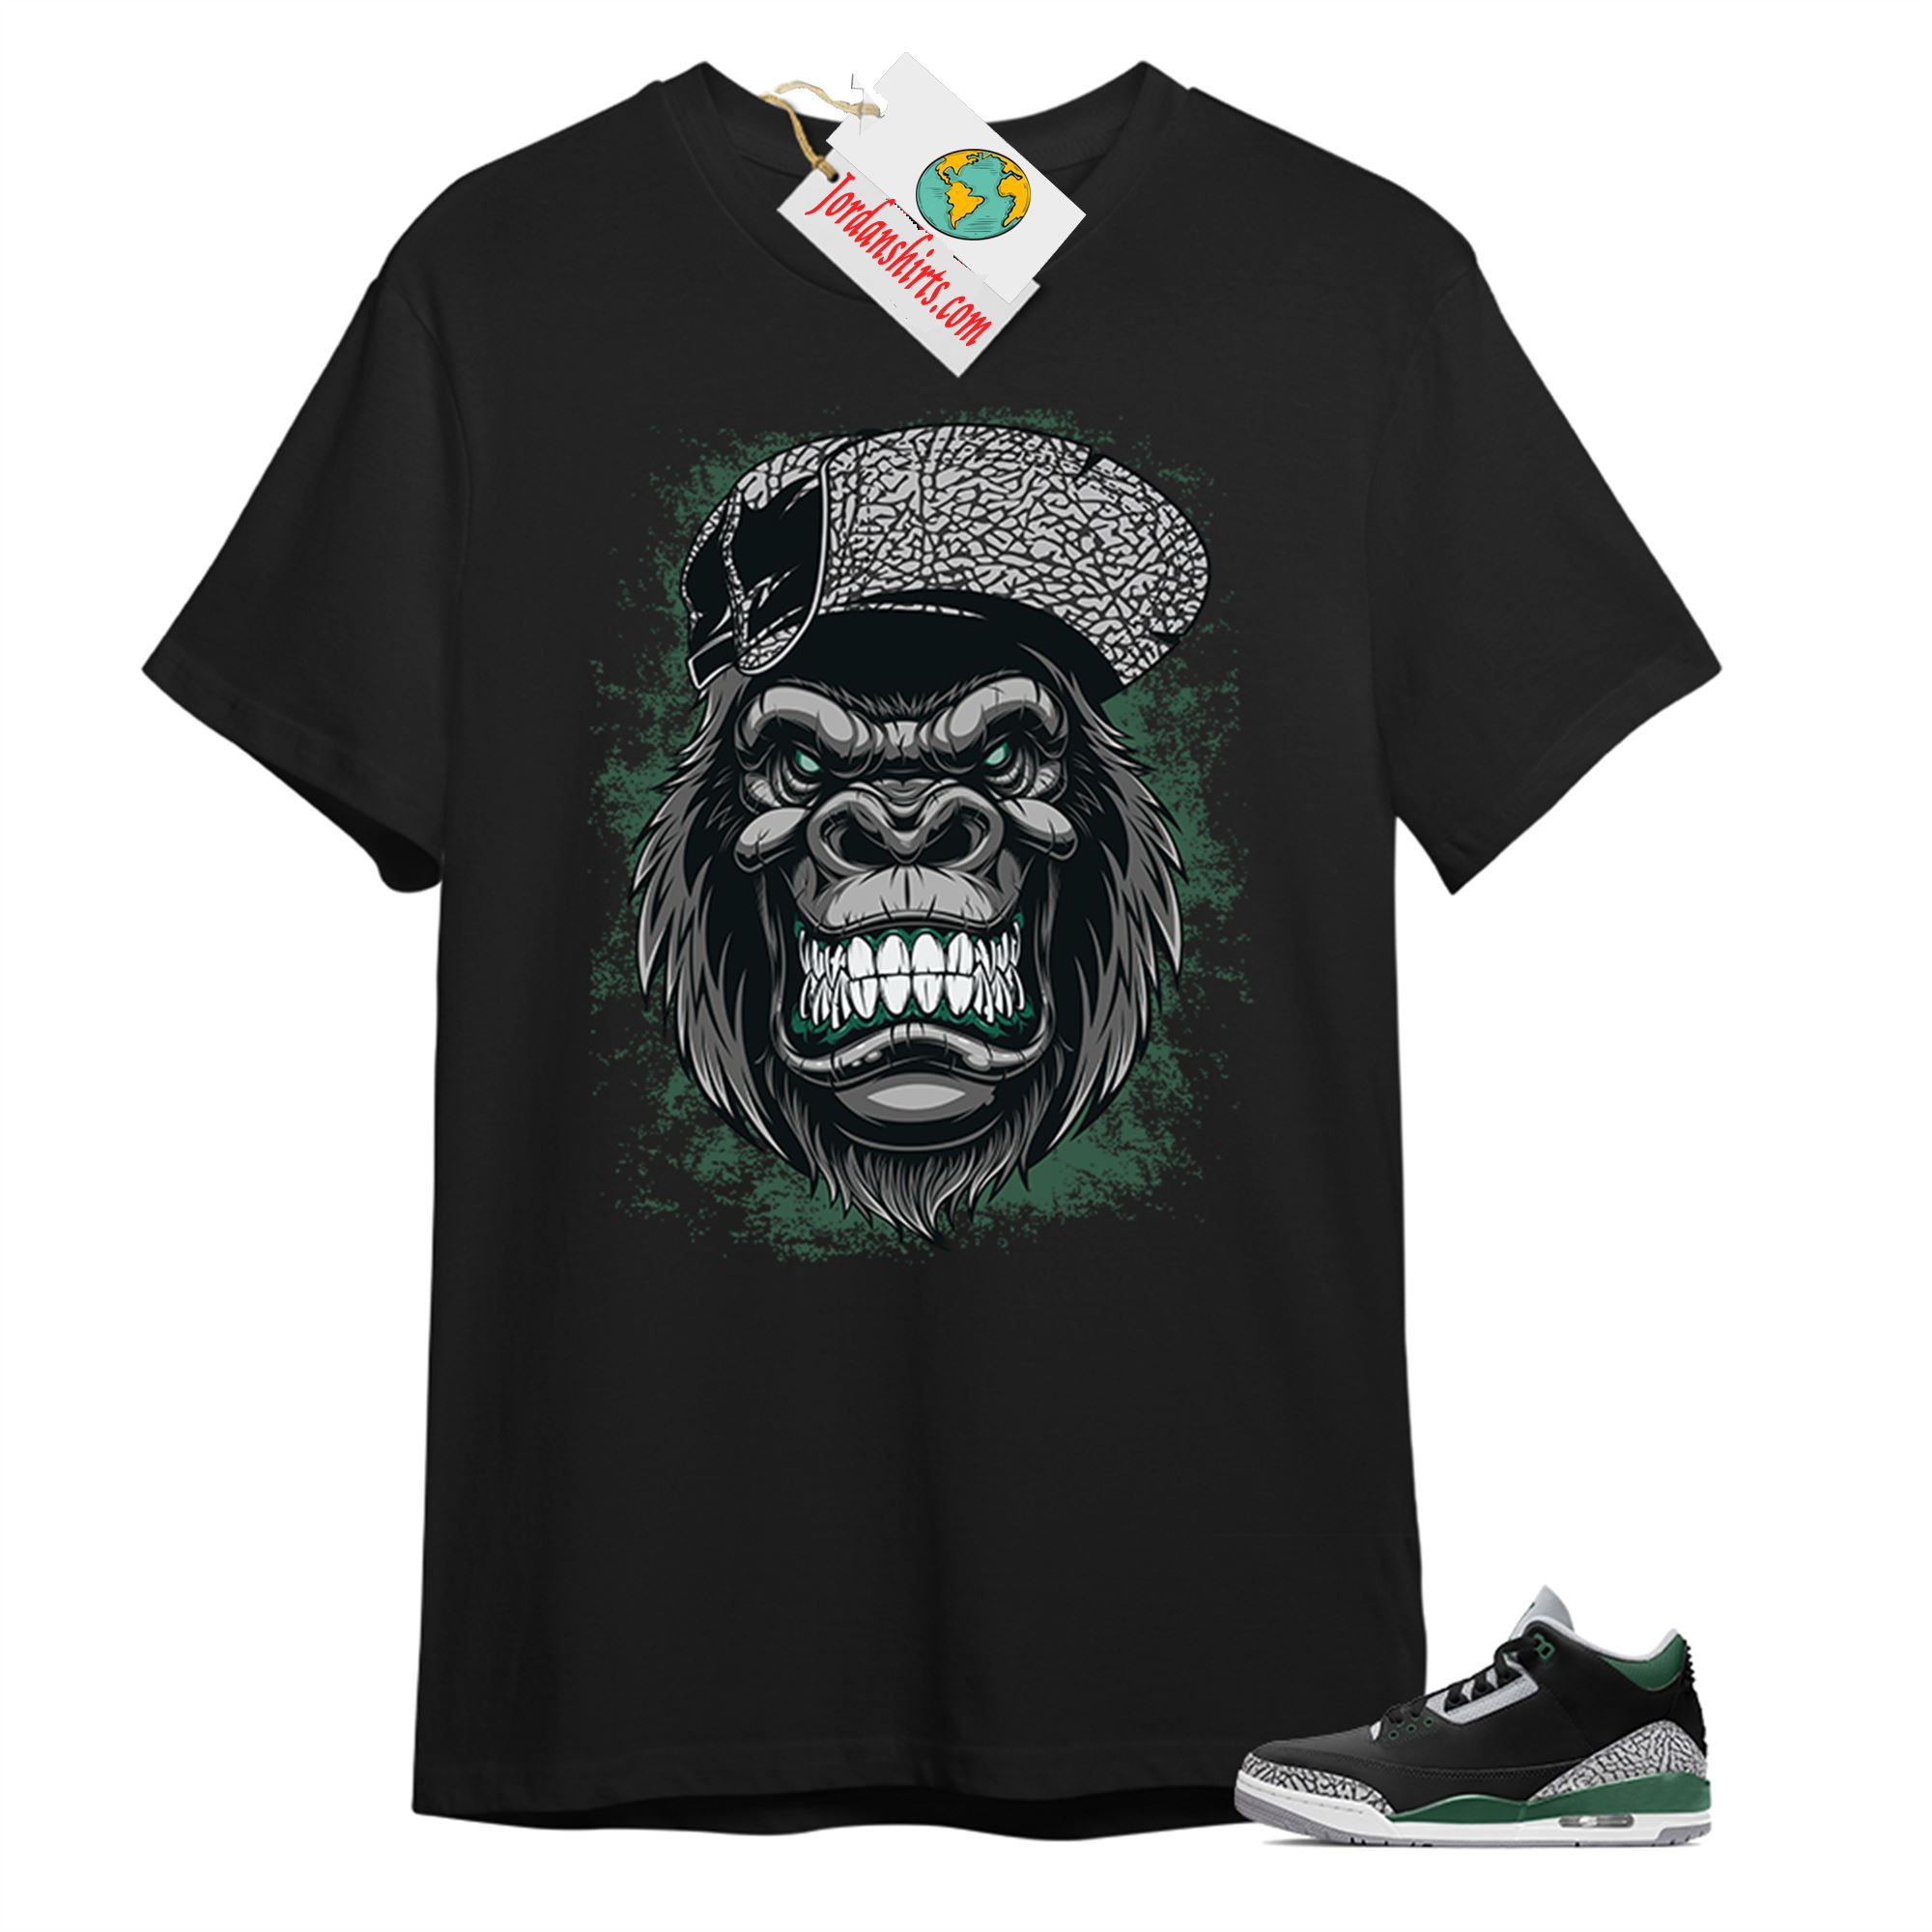 Jordan 3 Shirt, Ferocious Gorilla Black T-shirt Air Jordan 3 Pine Green 3s Plus Size Up To 5xl